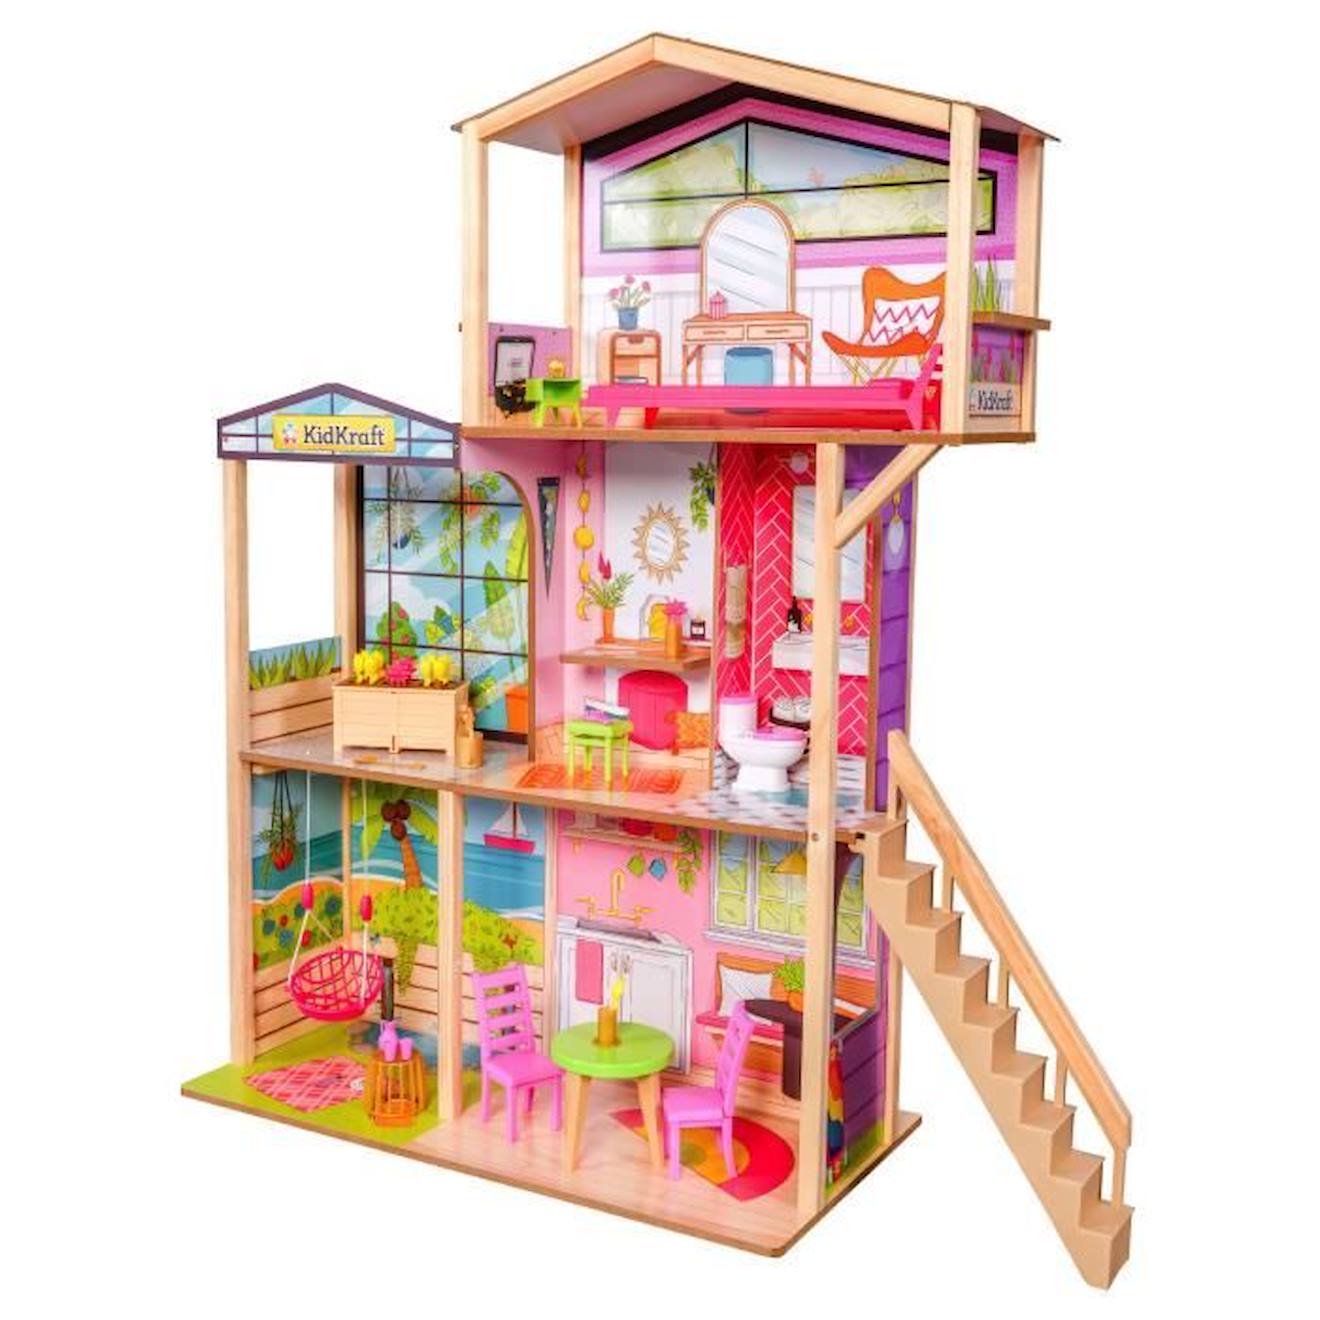 Maison poupée / Barbie Kidkraft - Kidkraft | Beebs